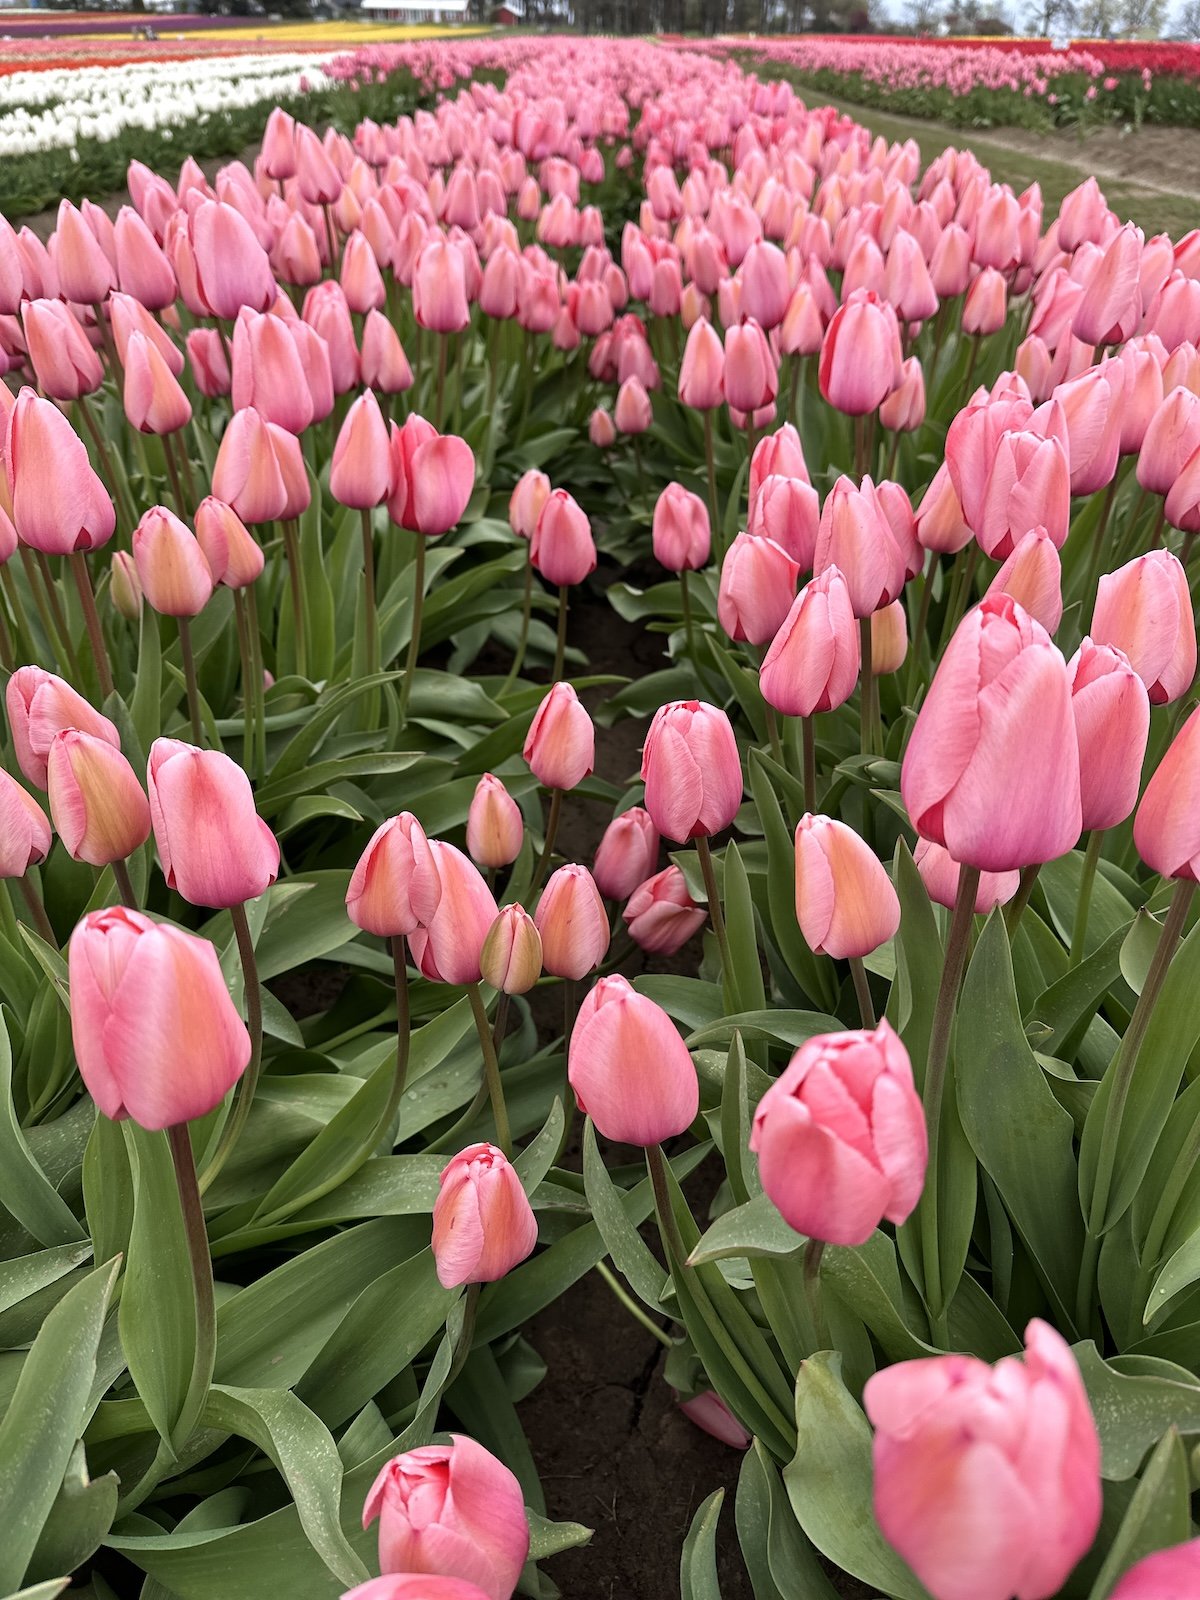 Visiting the Oregon Tulip Farm + Gardening in April at Le Papillon